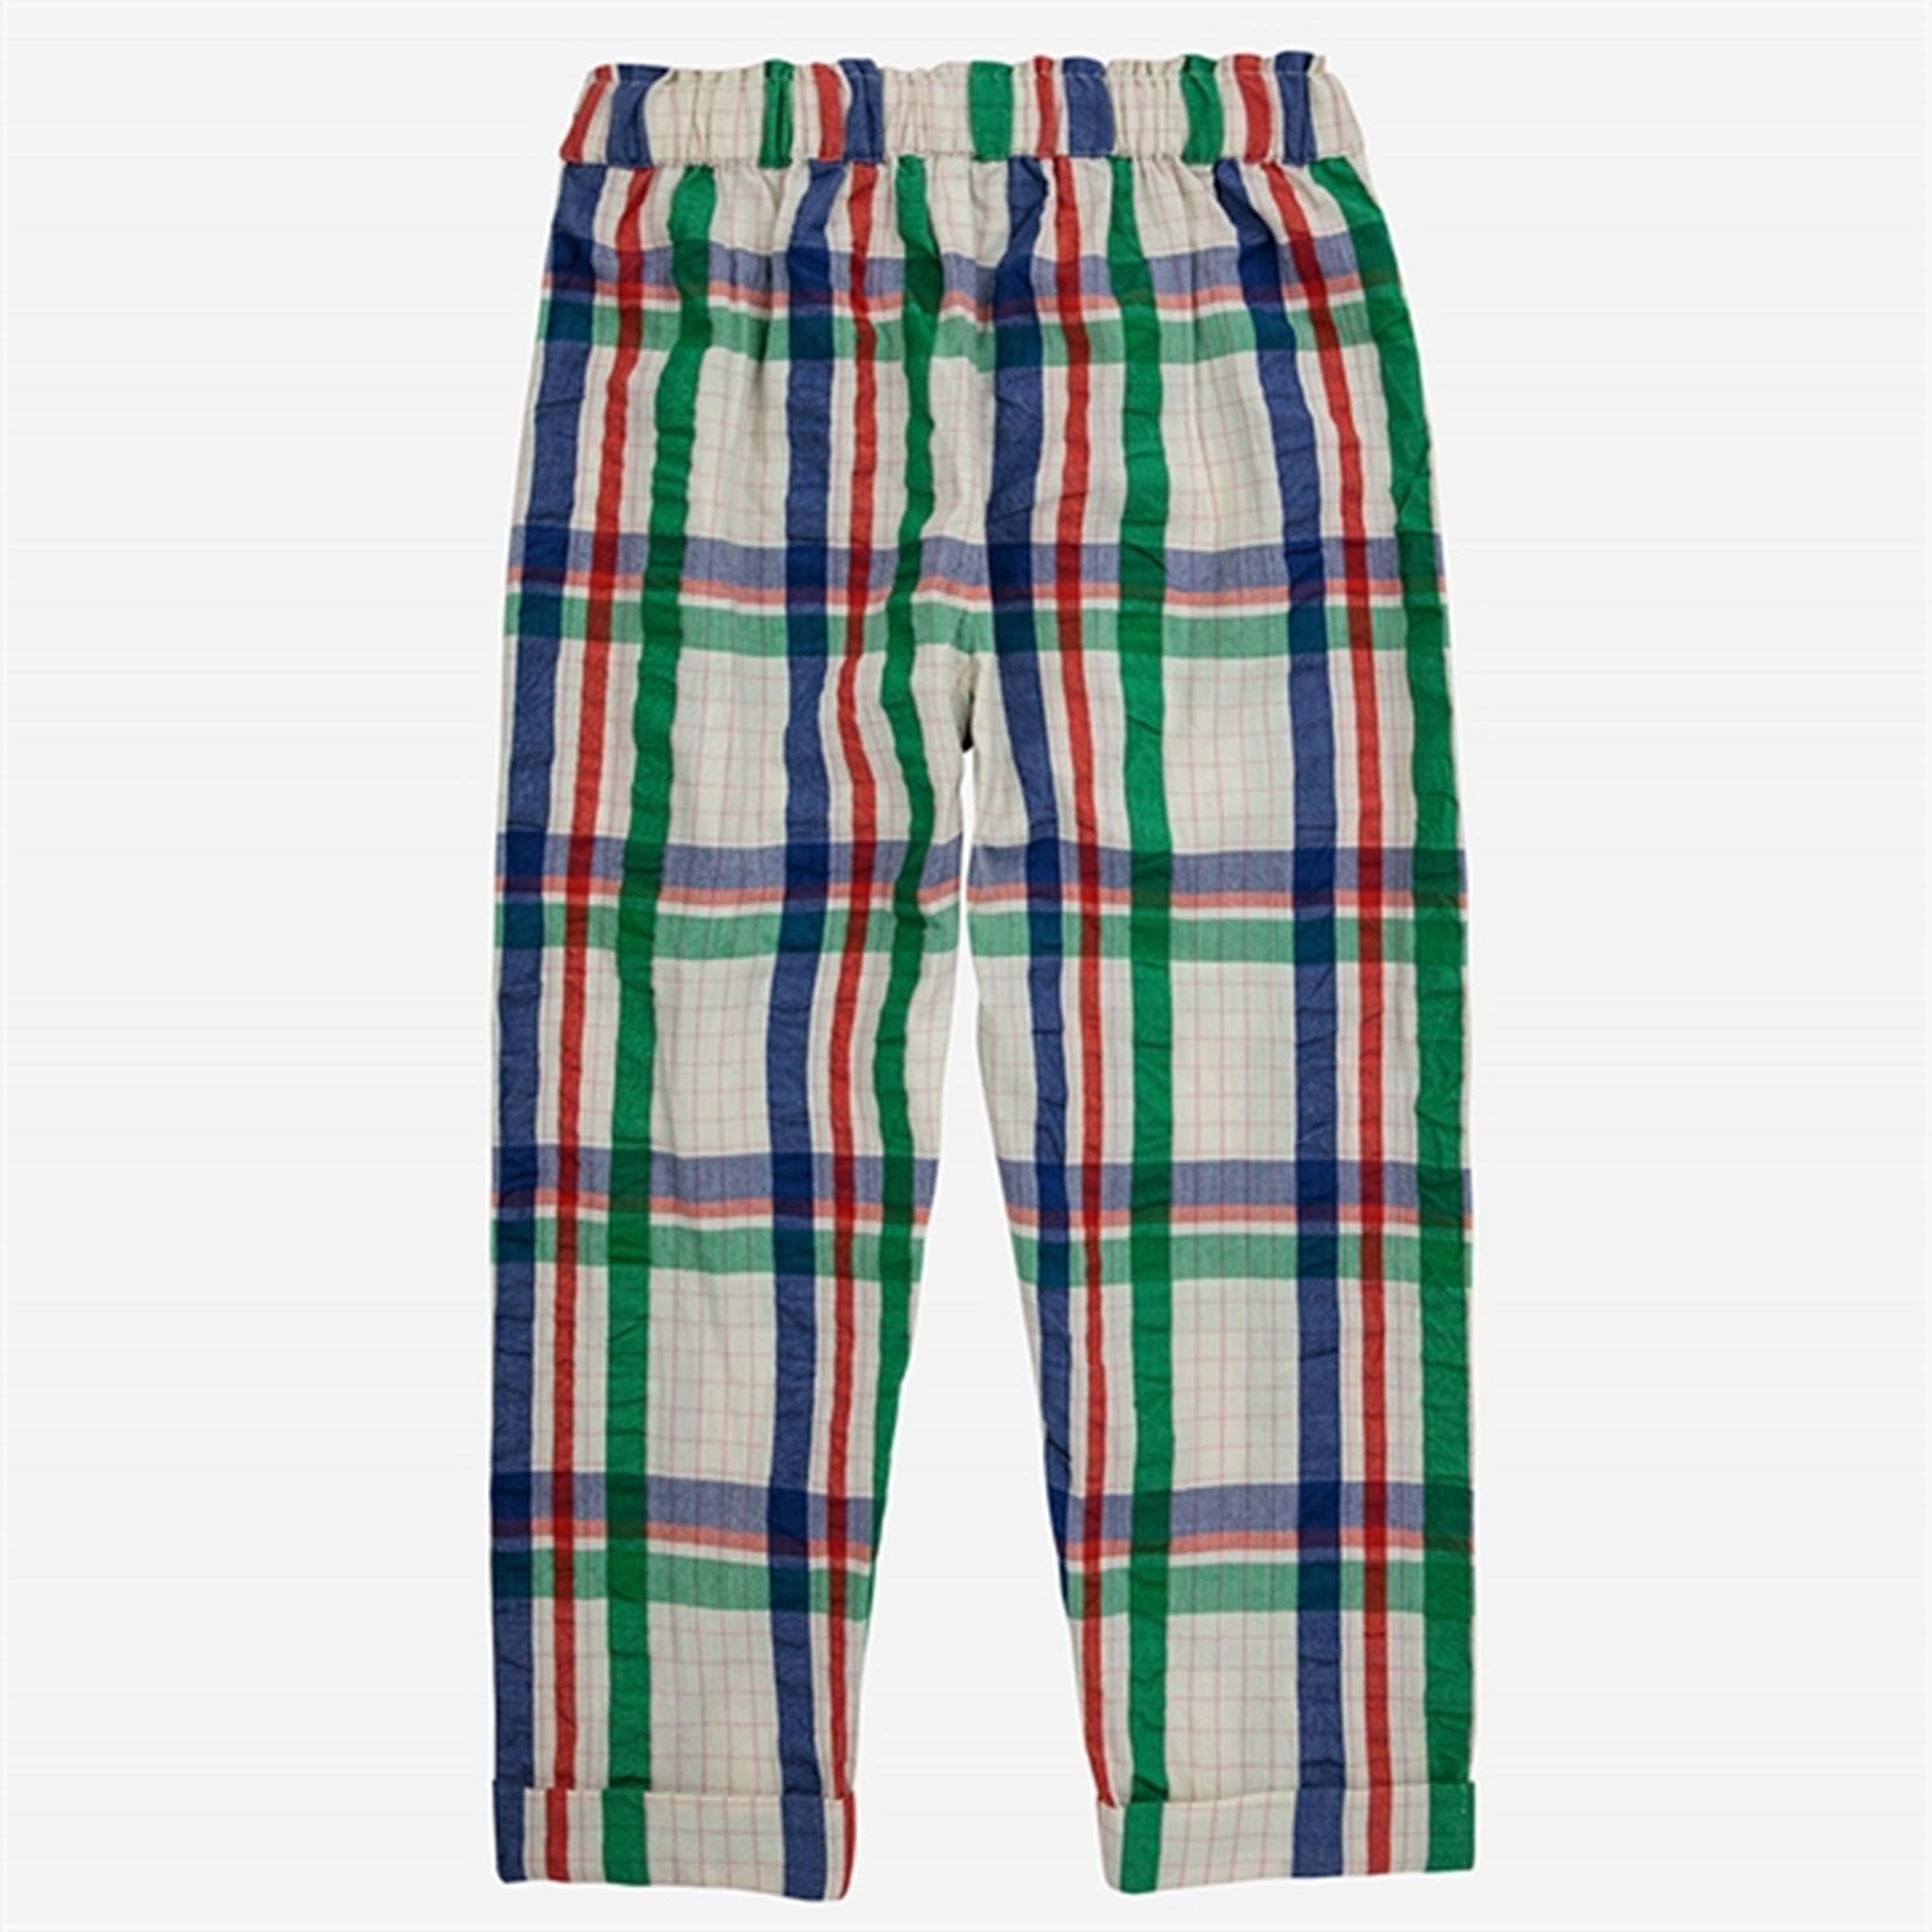 Bobo Choses Madras Checks Woven Pants Baggy Multicolor 9